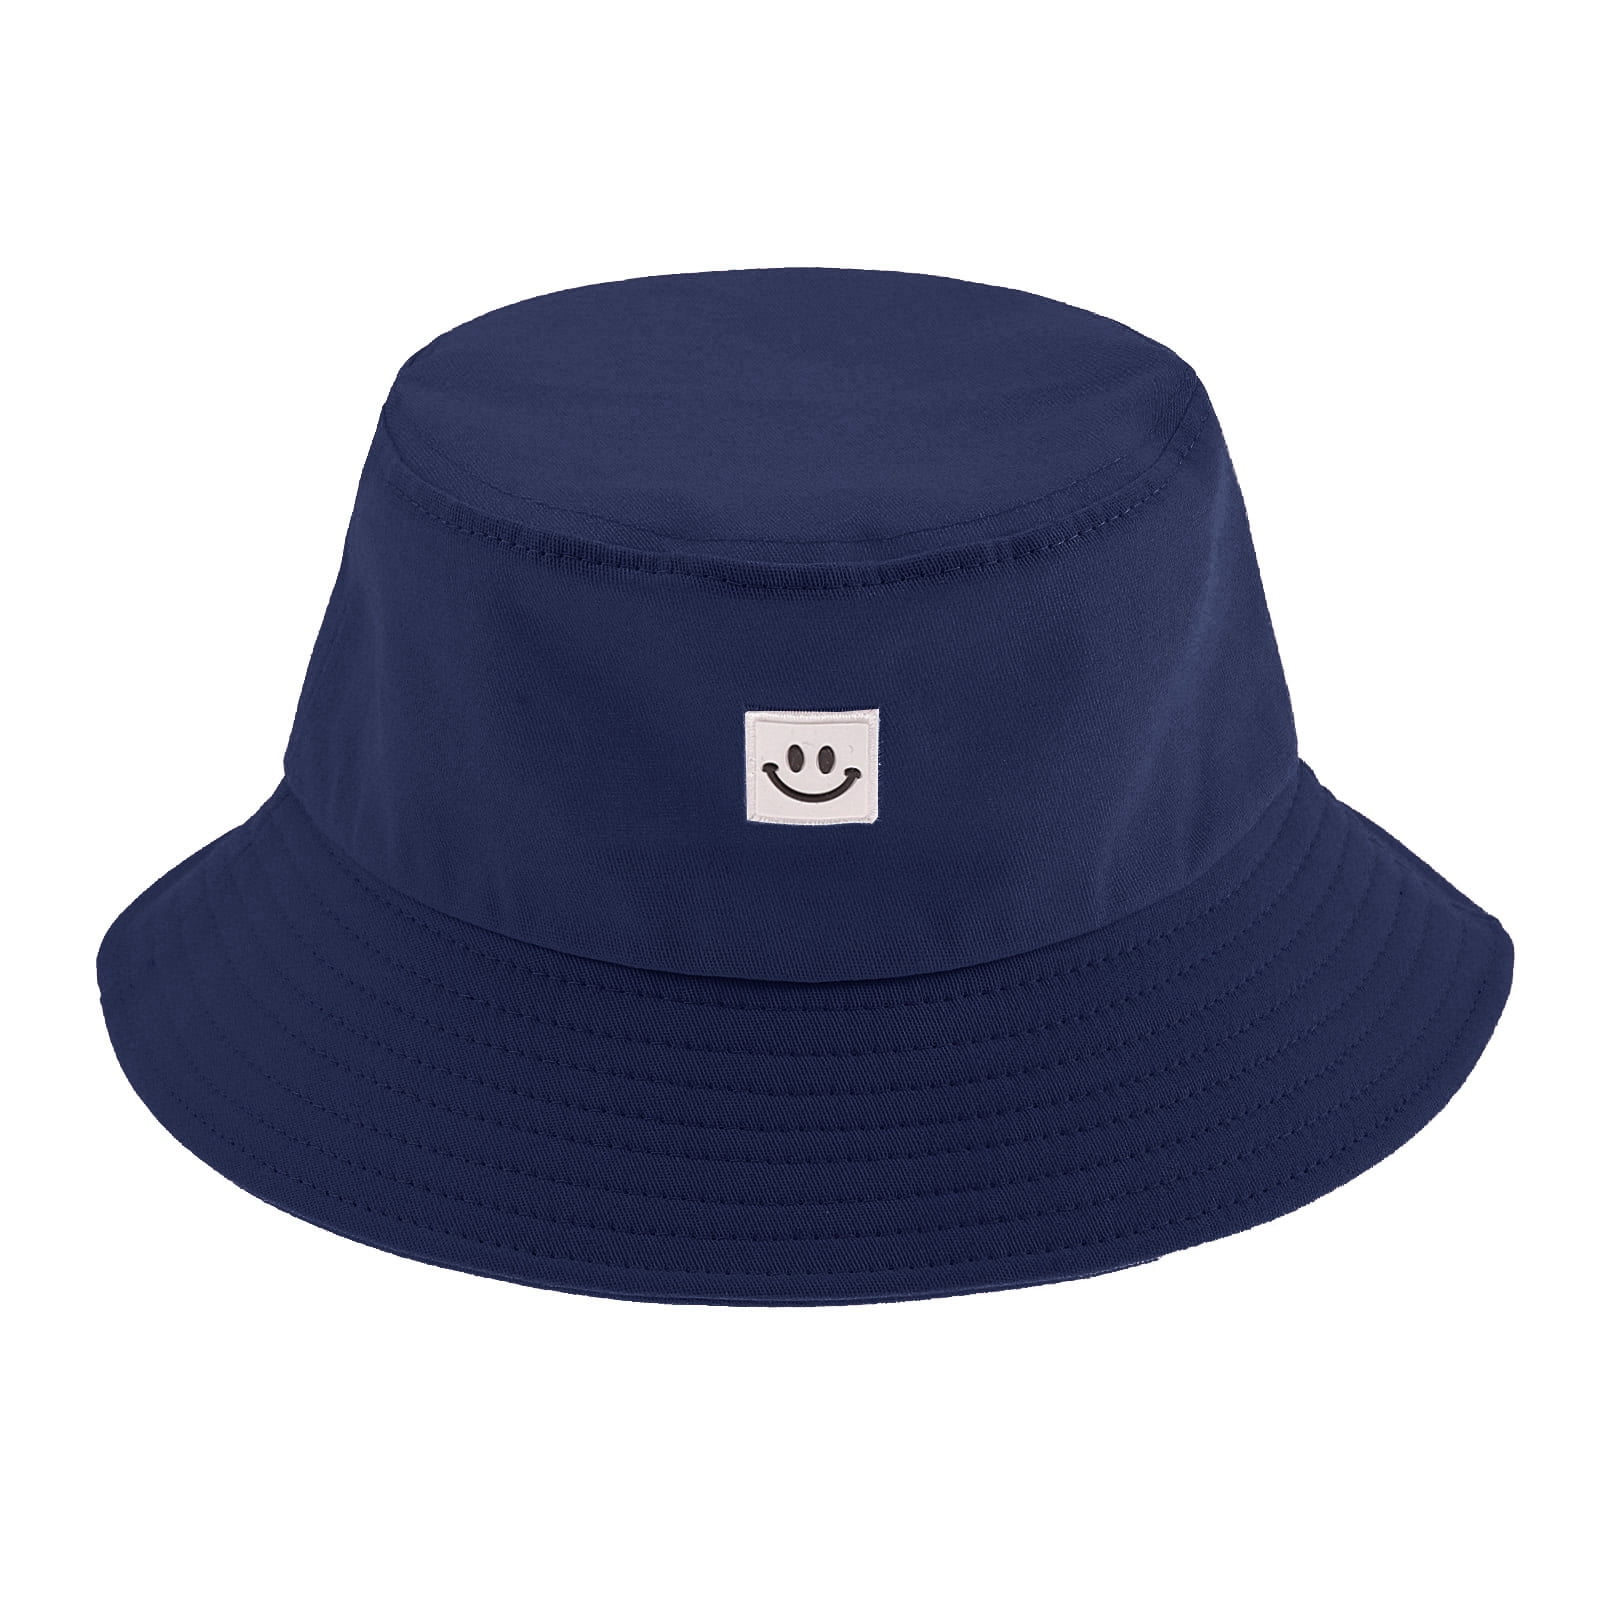 UMIPUBO Bucket Sun Hat Women Hat Fisherman Hat Smile Face Sunbonnet Hip Pop Casual Fedoras Outdoor Beach Cap